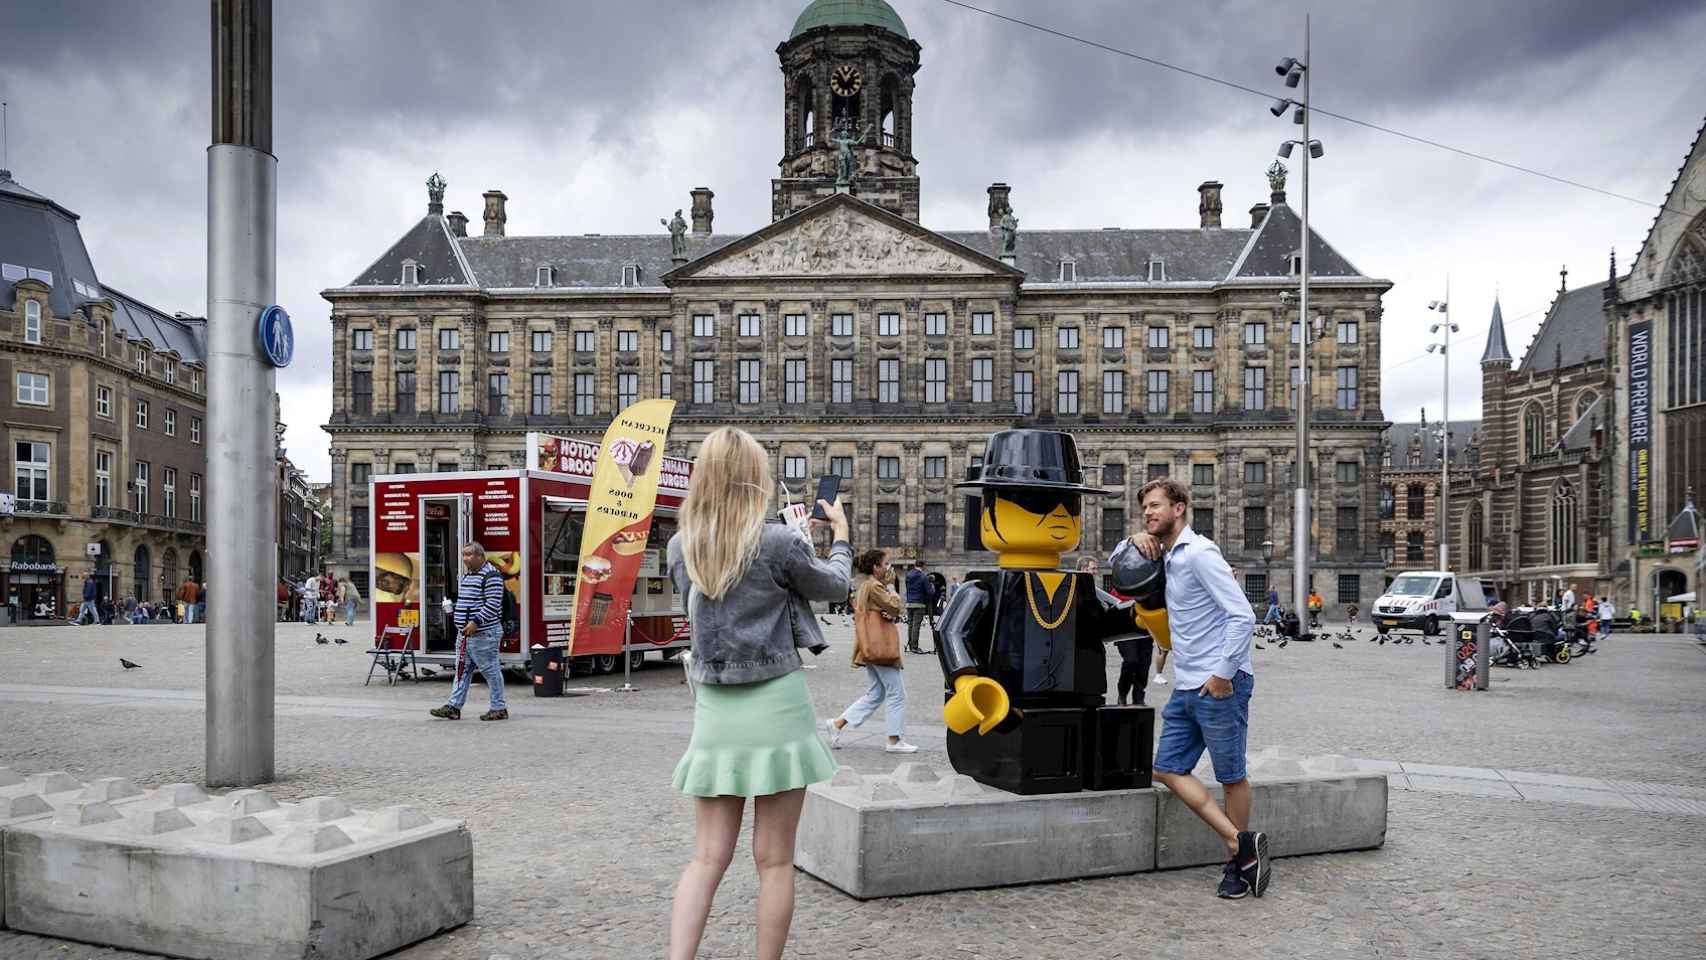 Turismo sin mascarilla en la Plaza Dam de Amsterdam. EFE/EPA/ROBIN VAN LONKHUIJSEN